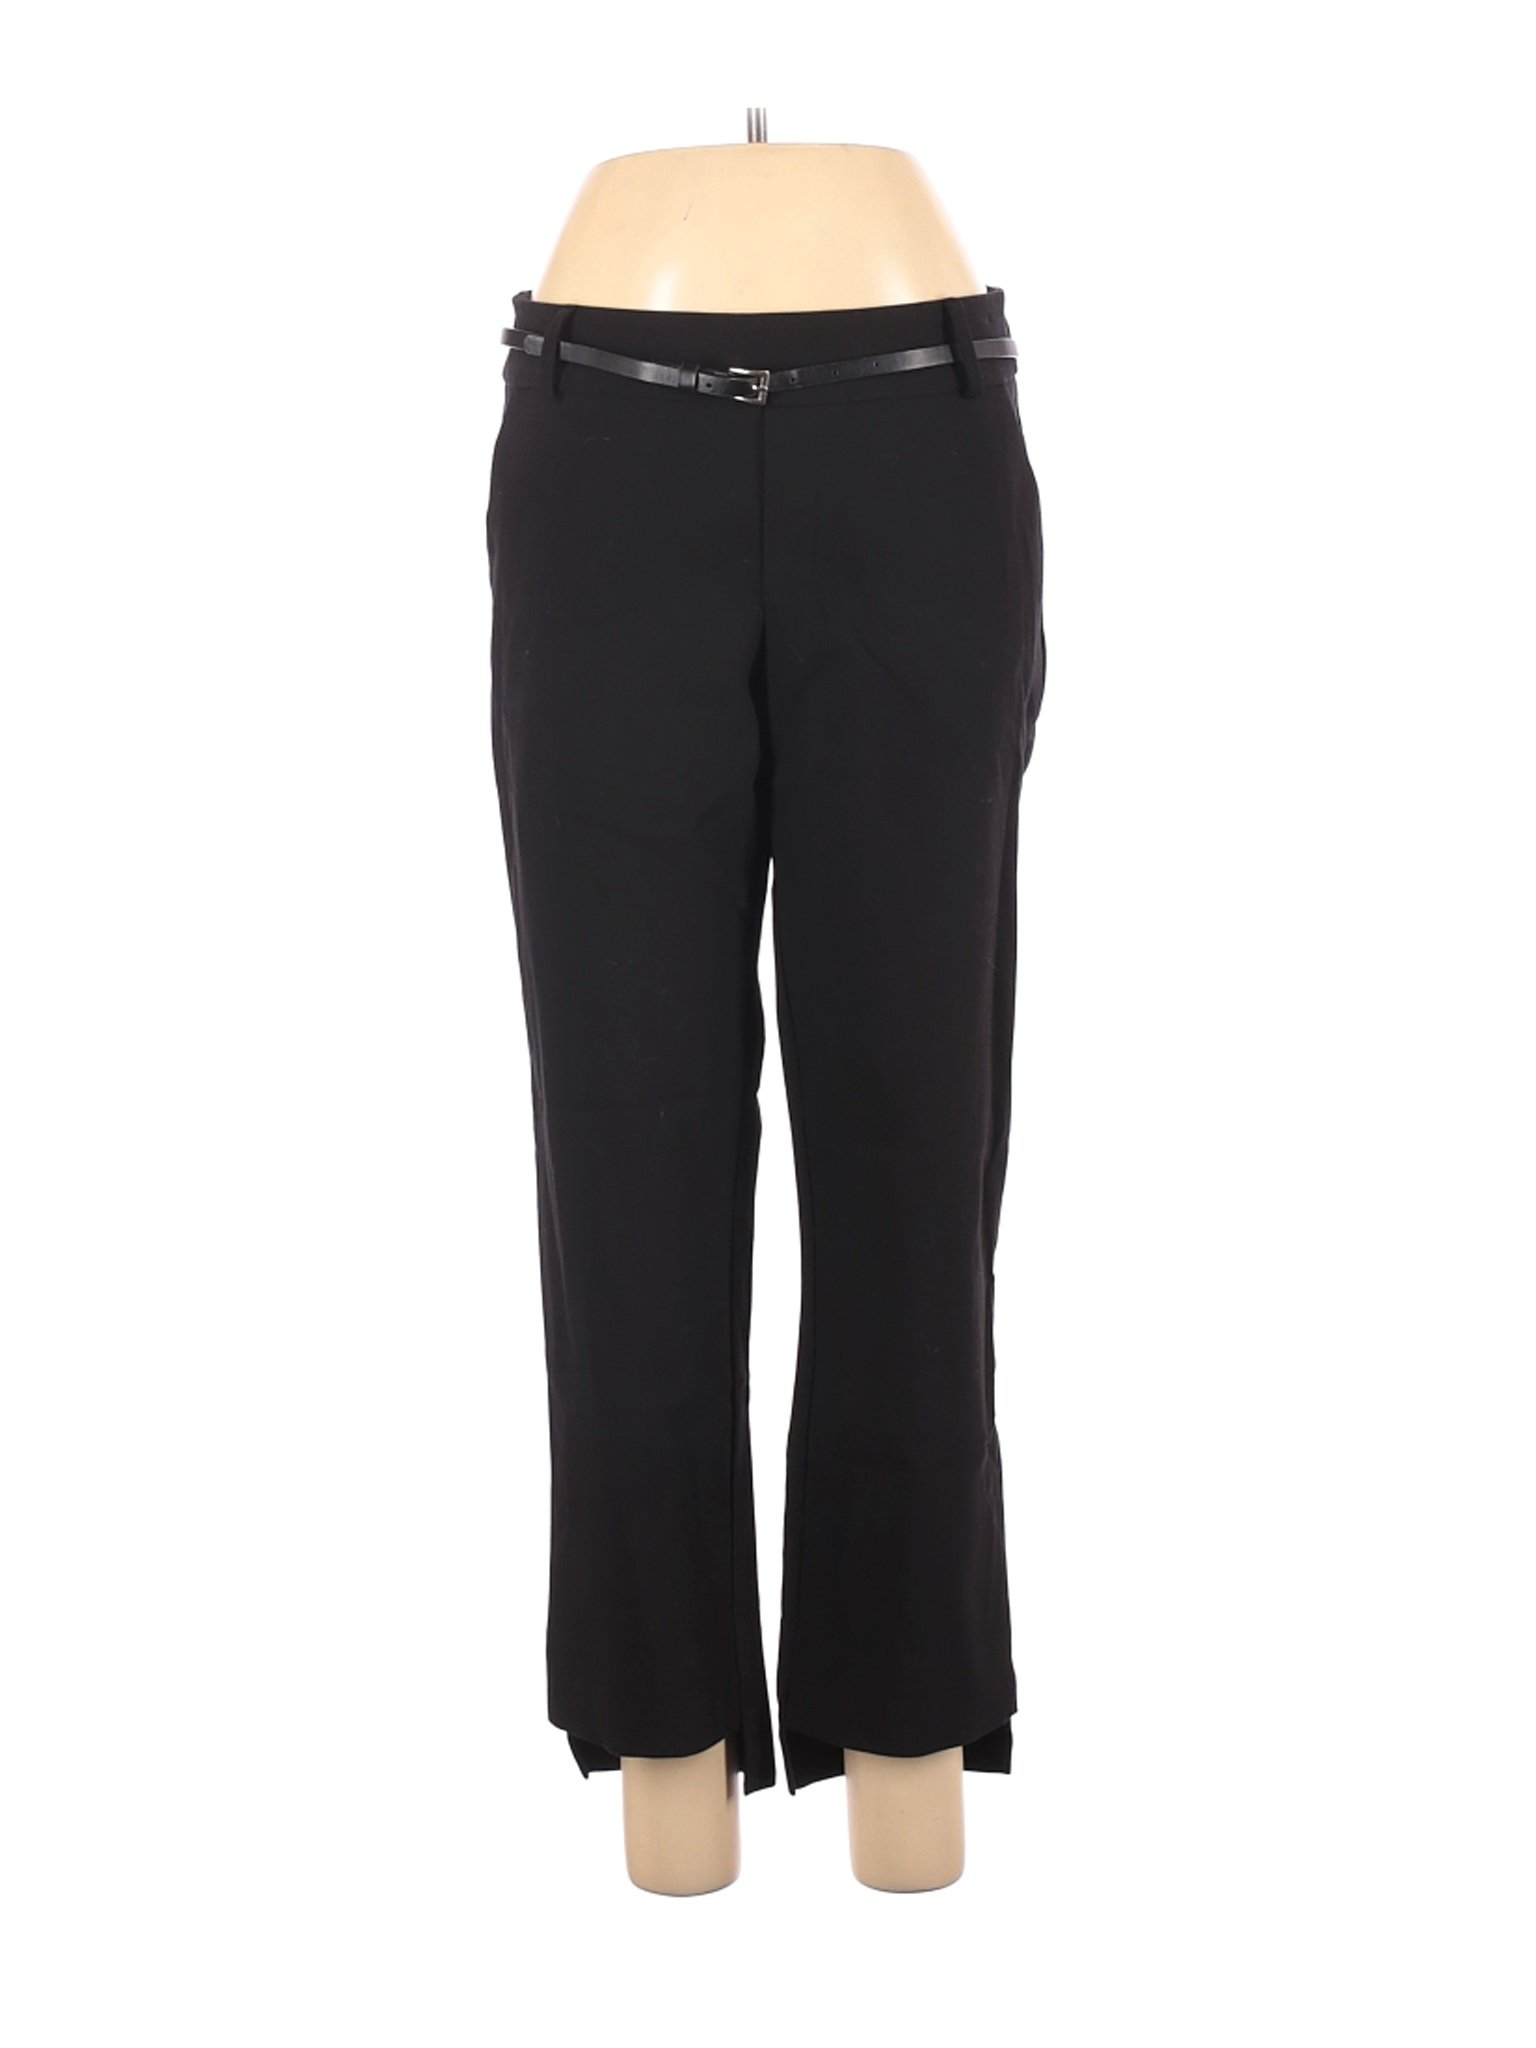 I Love Tyler Madison Women Black Dress Pants L | eBay